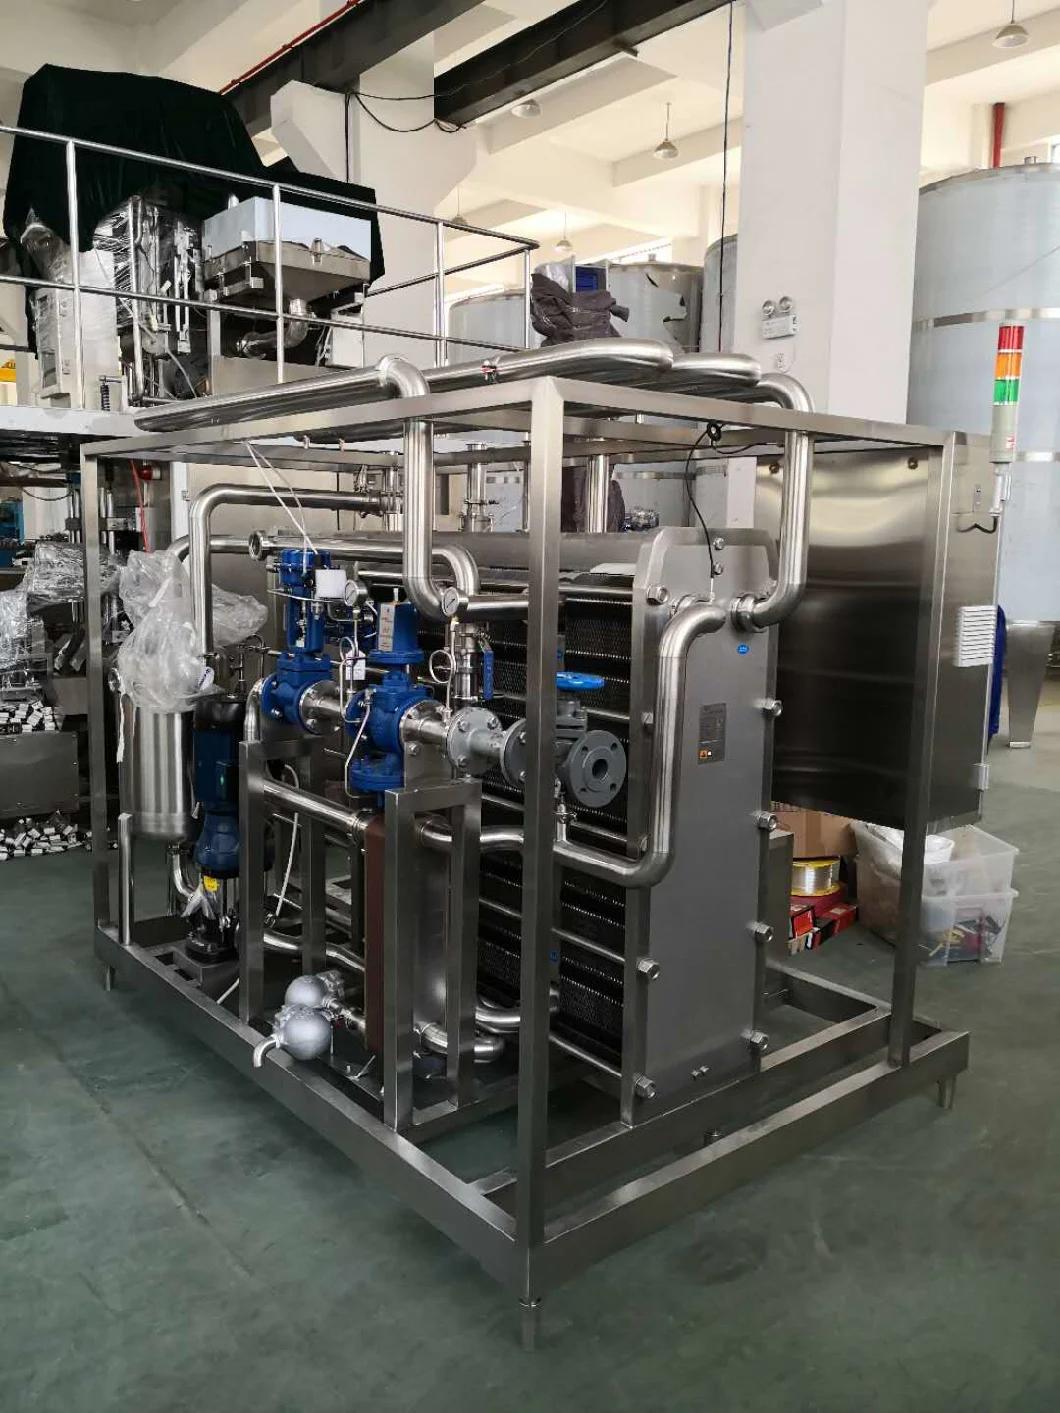 Ws 2020 Hot Sale Electric Heating Milk Sterilizing Machine Plate Pasteurizer